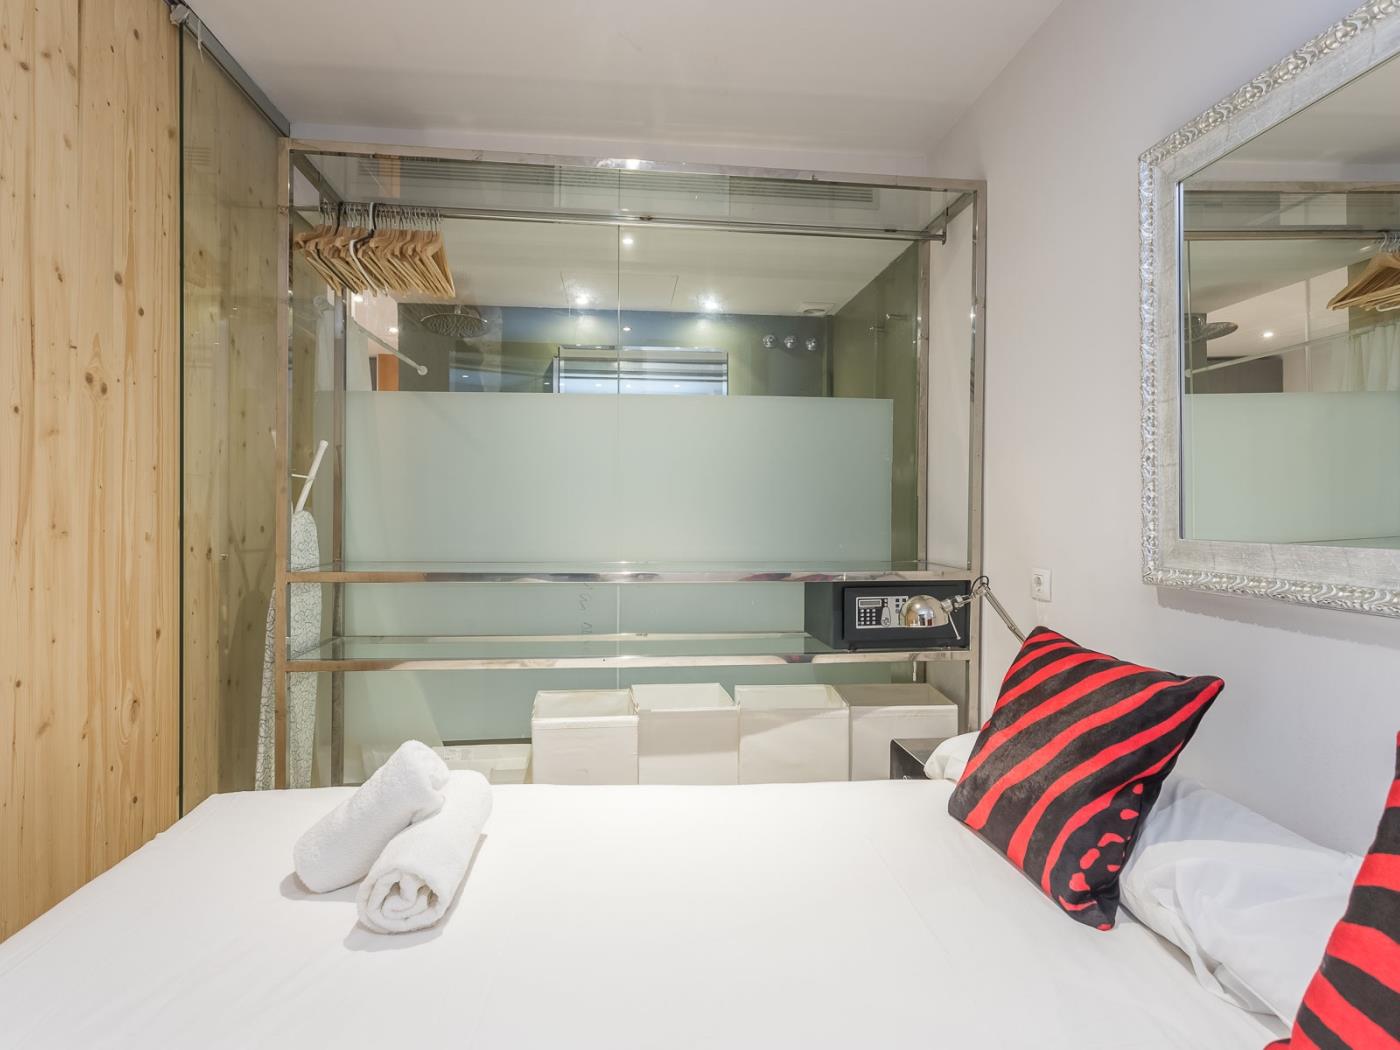 Grazioso appartamento a Sant Gervasi in affitto mensile - My Space Barcelona Appartements